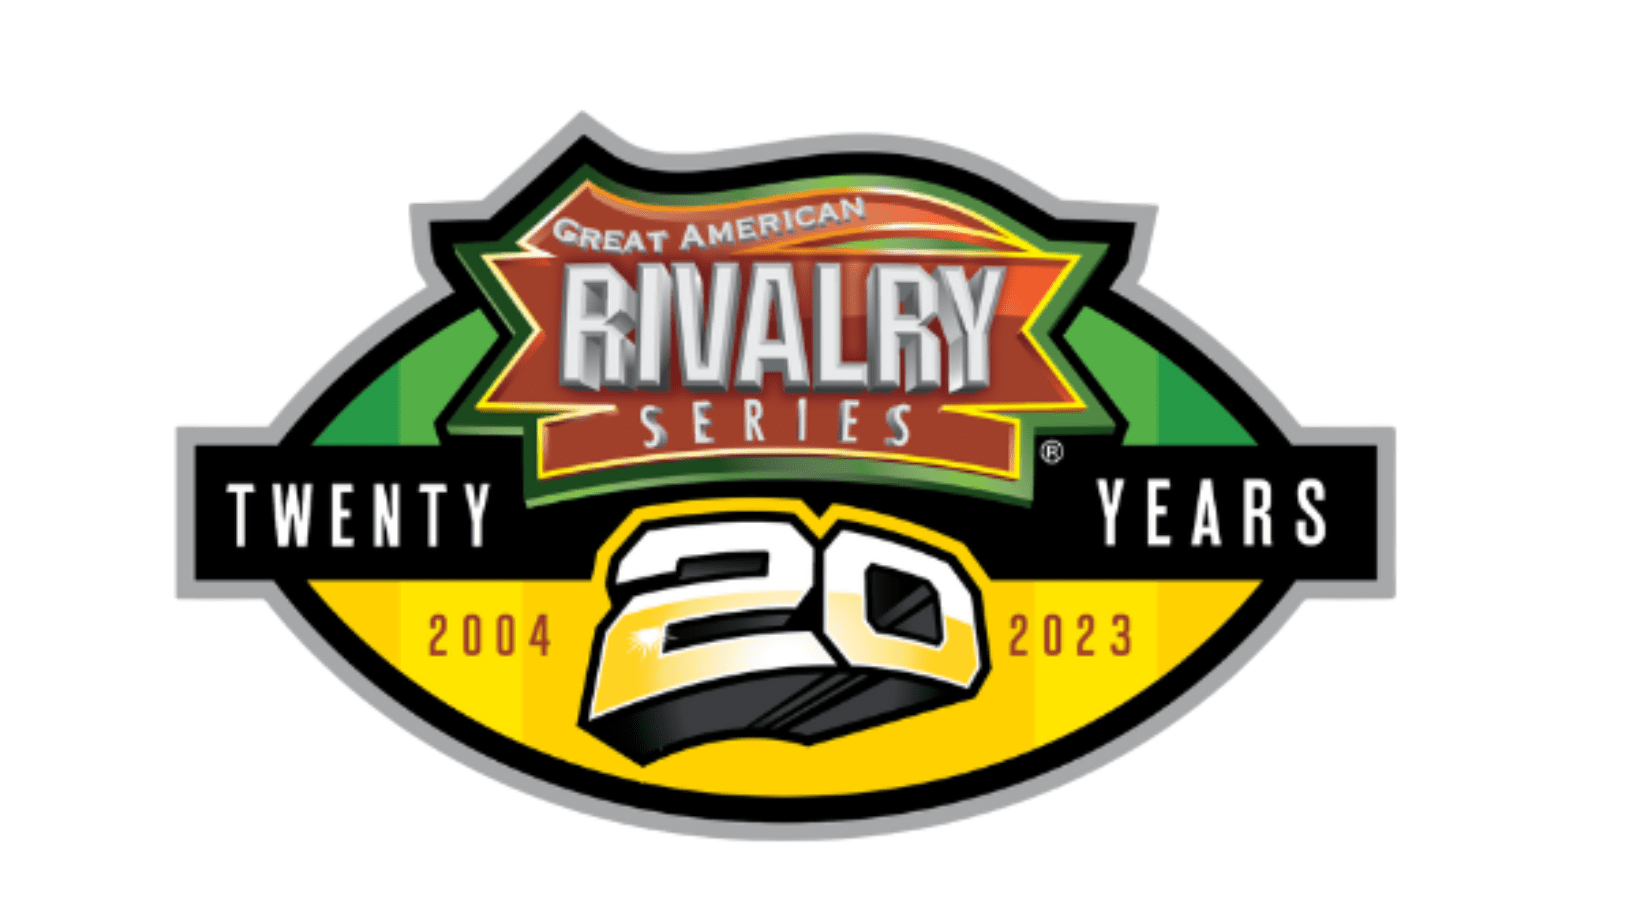 Great American Rivalry Series Logo